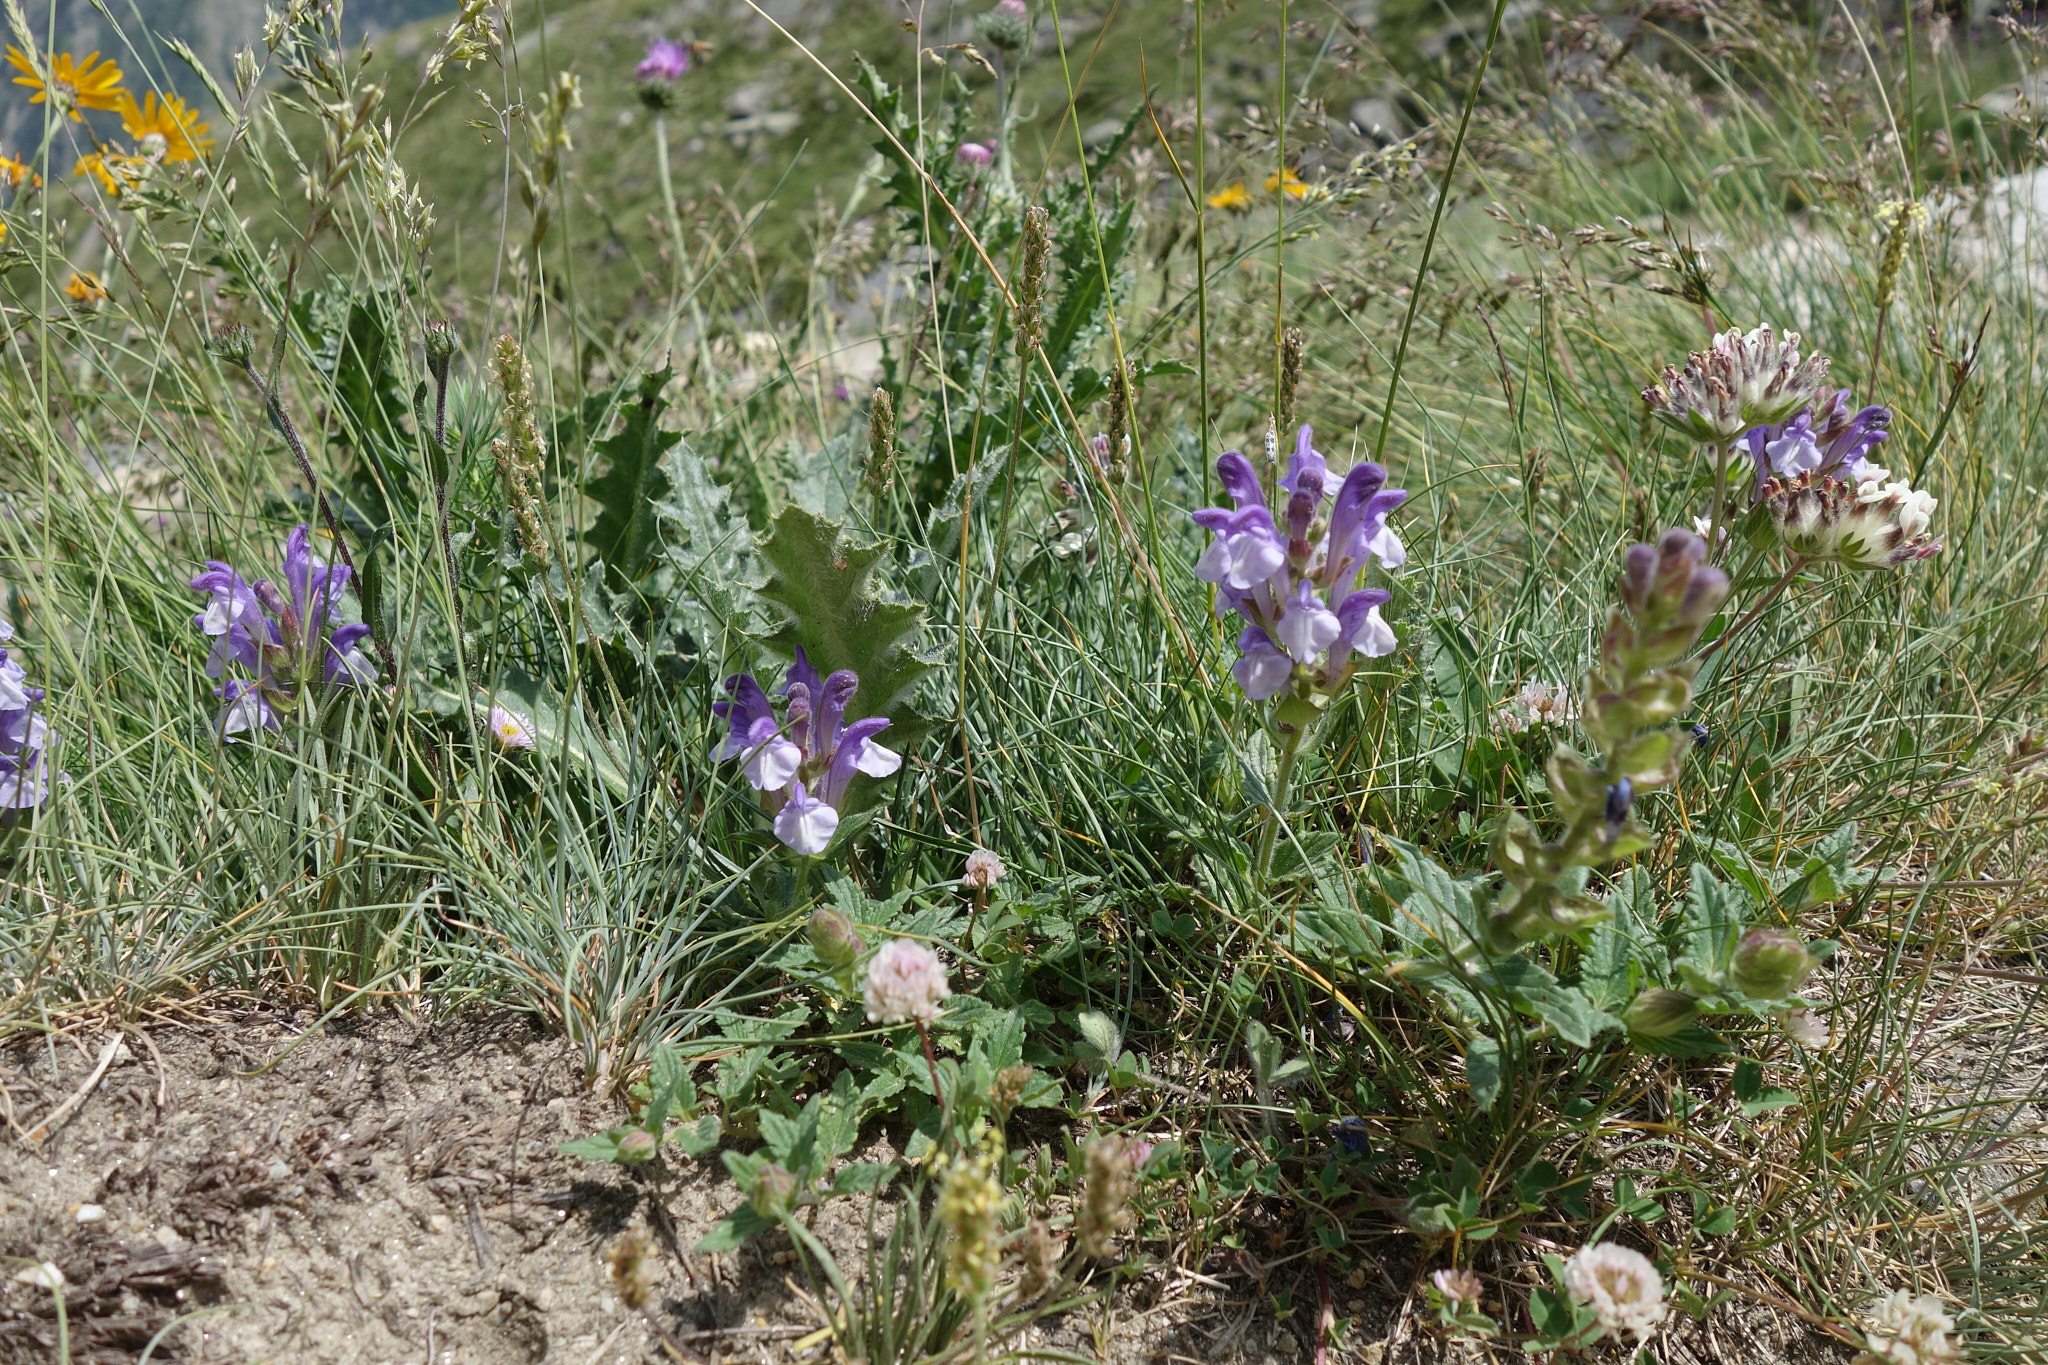 Alpfrossört (<em>Scutellaria alpina</em>)